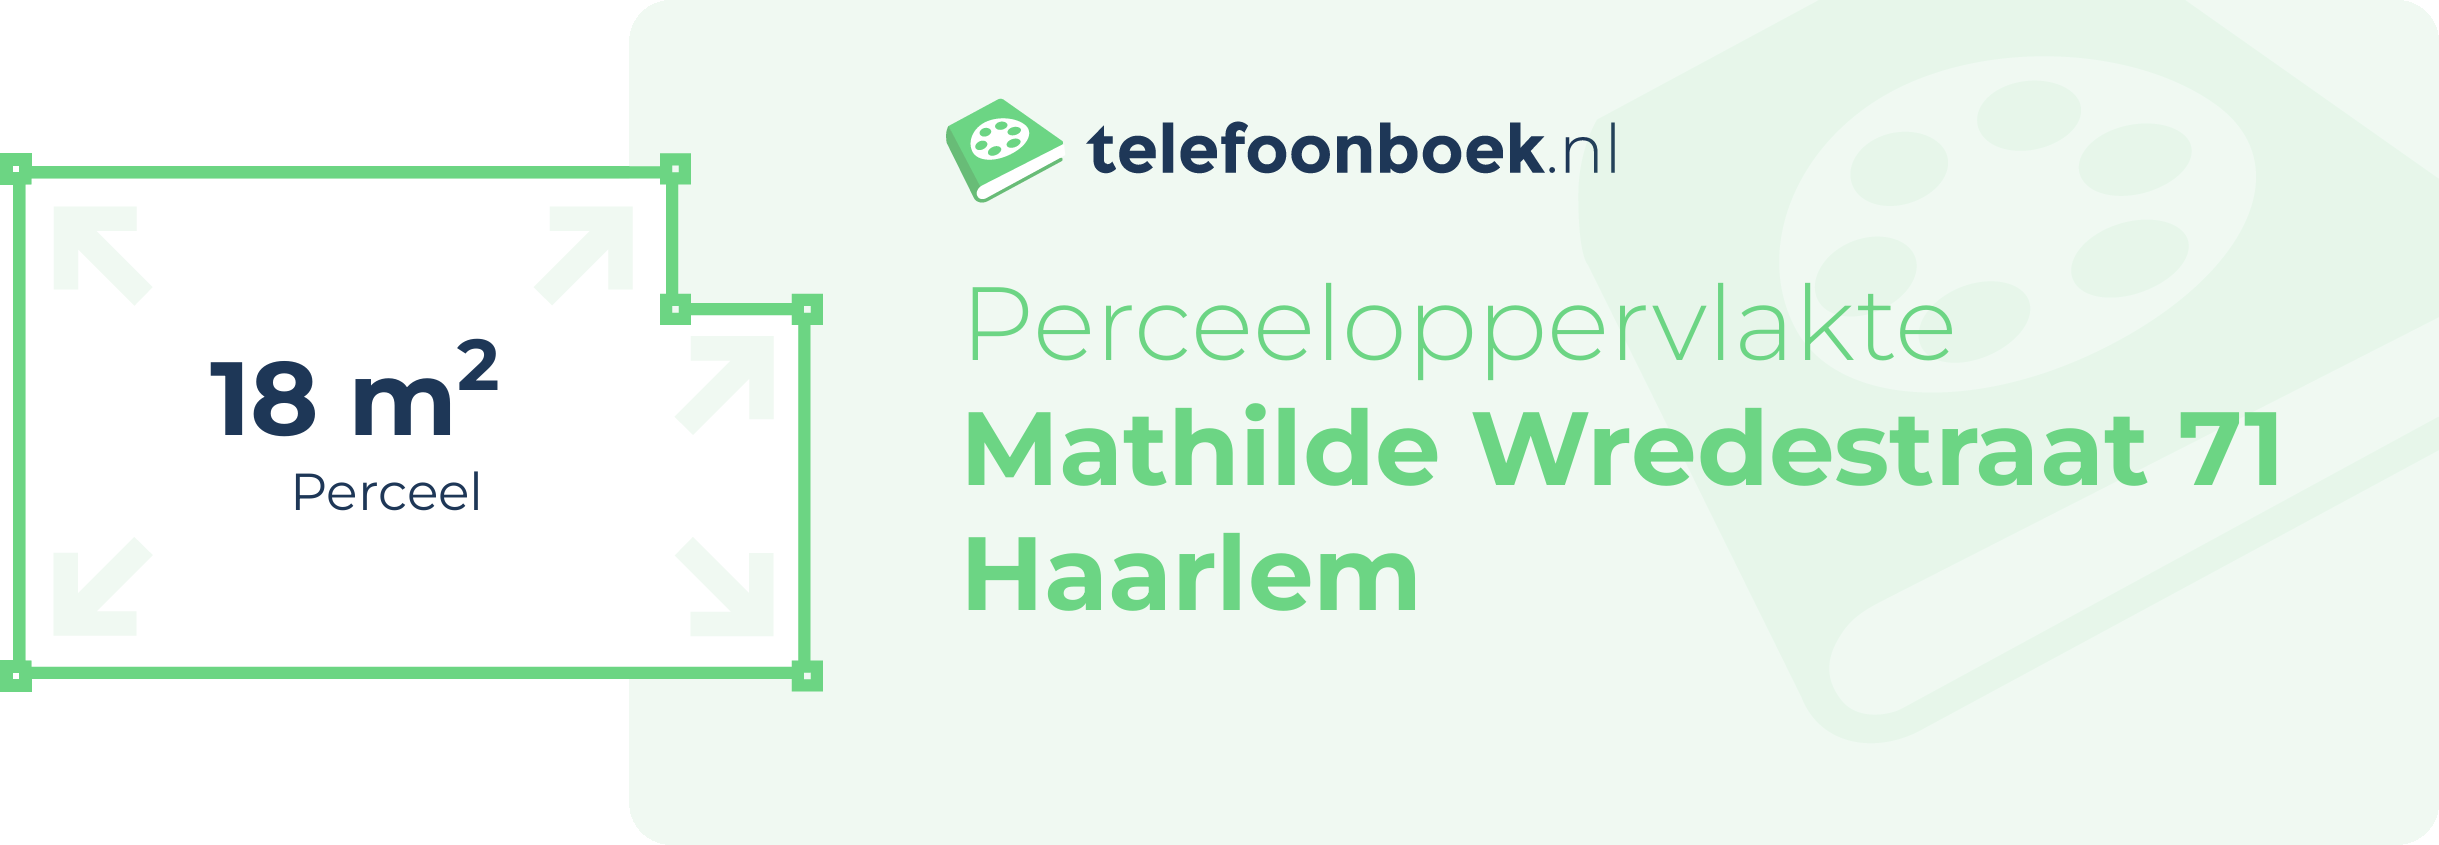 Perceeloppervlakte Mathilde Wredestraat 71 Haarlem